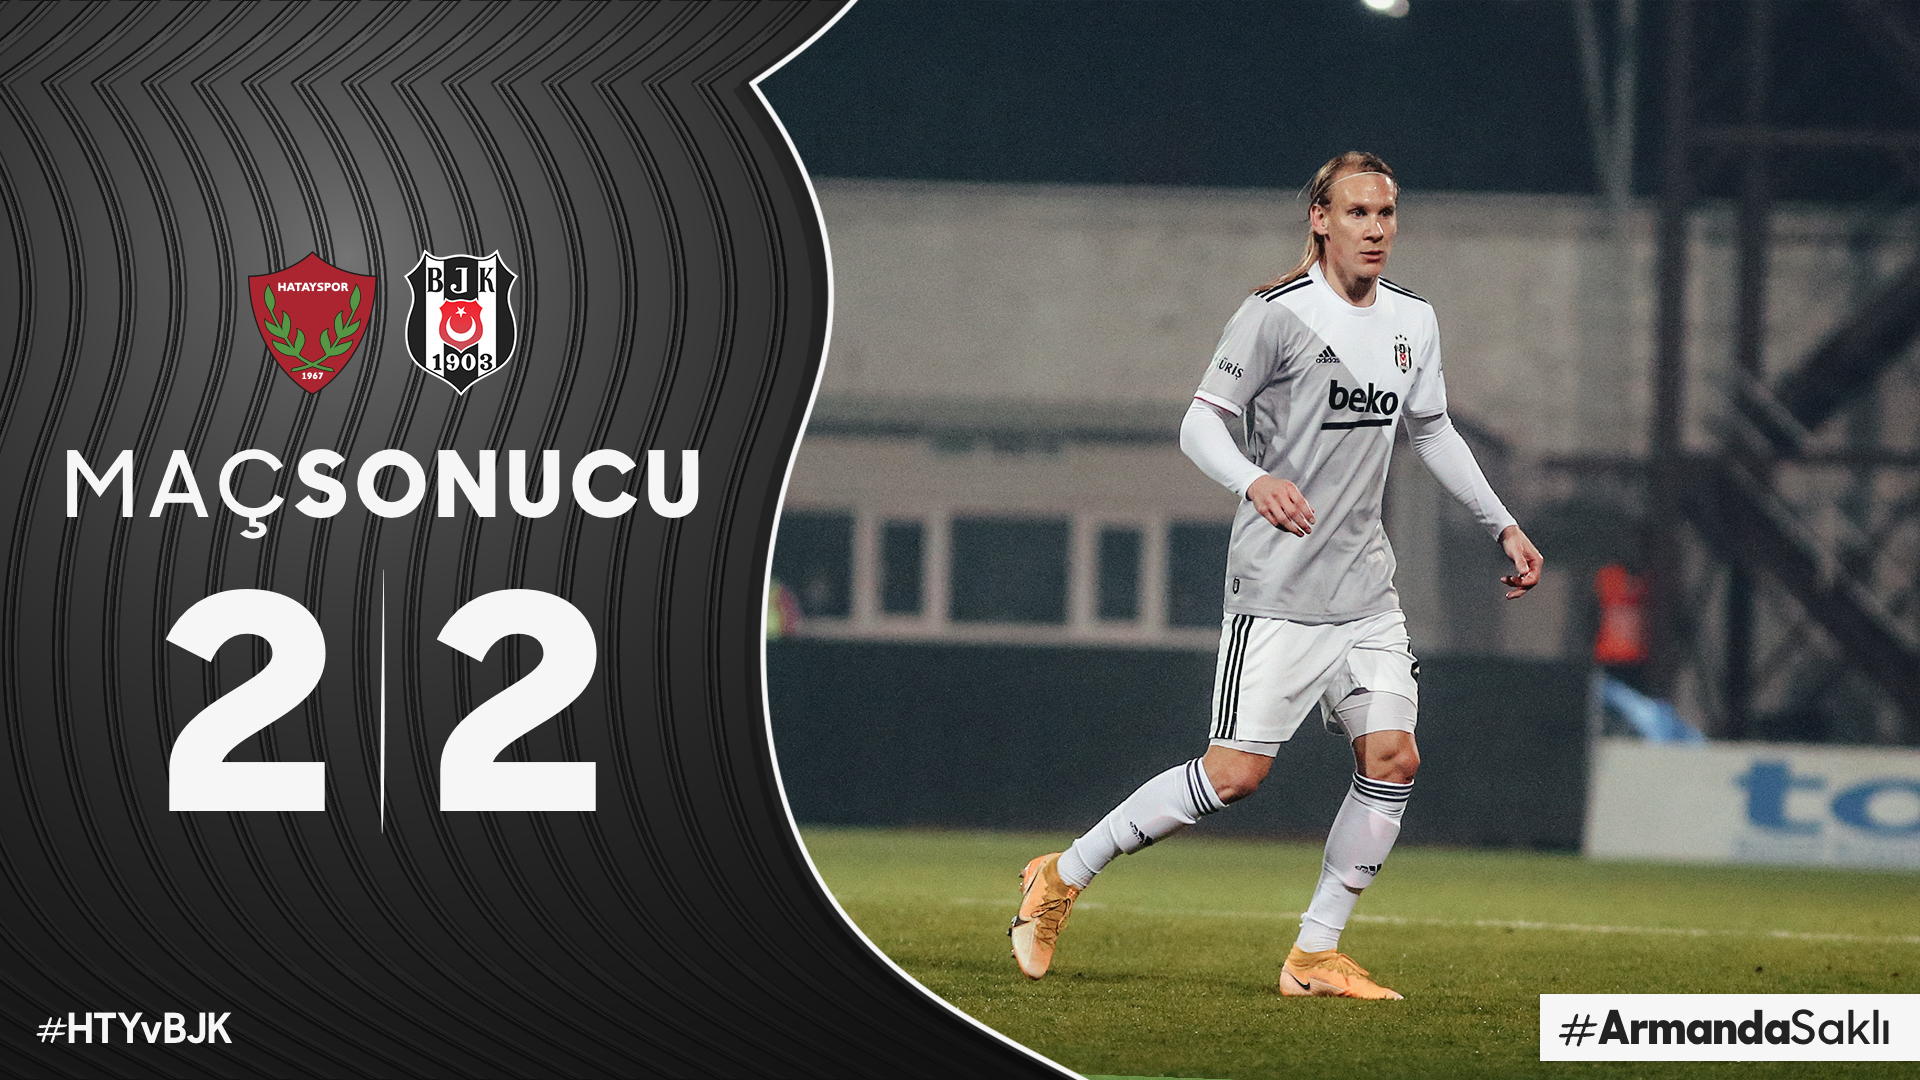 Beşiktaş JK on X: Maç sonucu. #GSvBJK